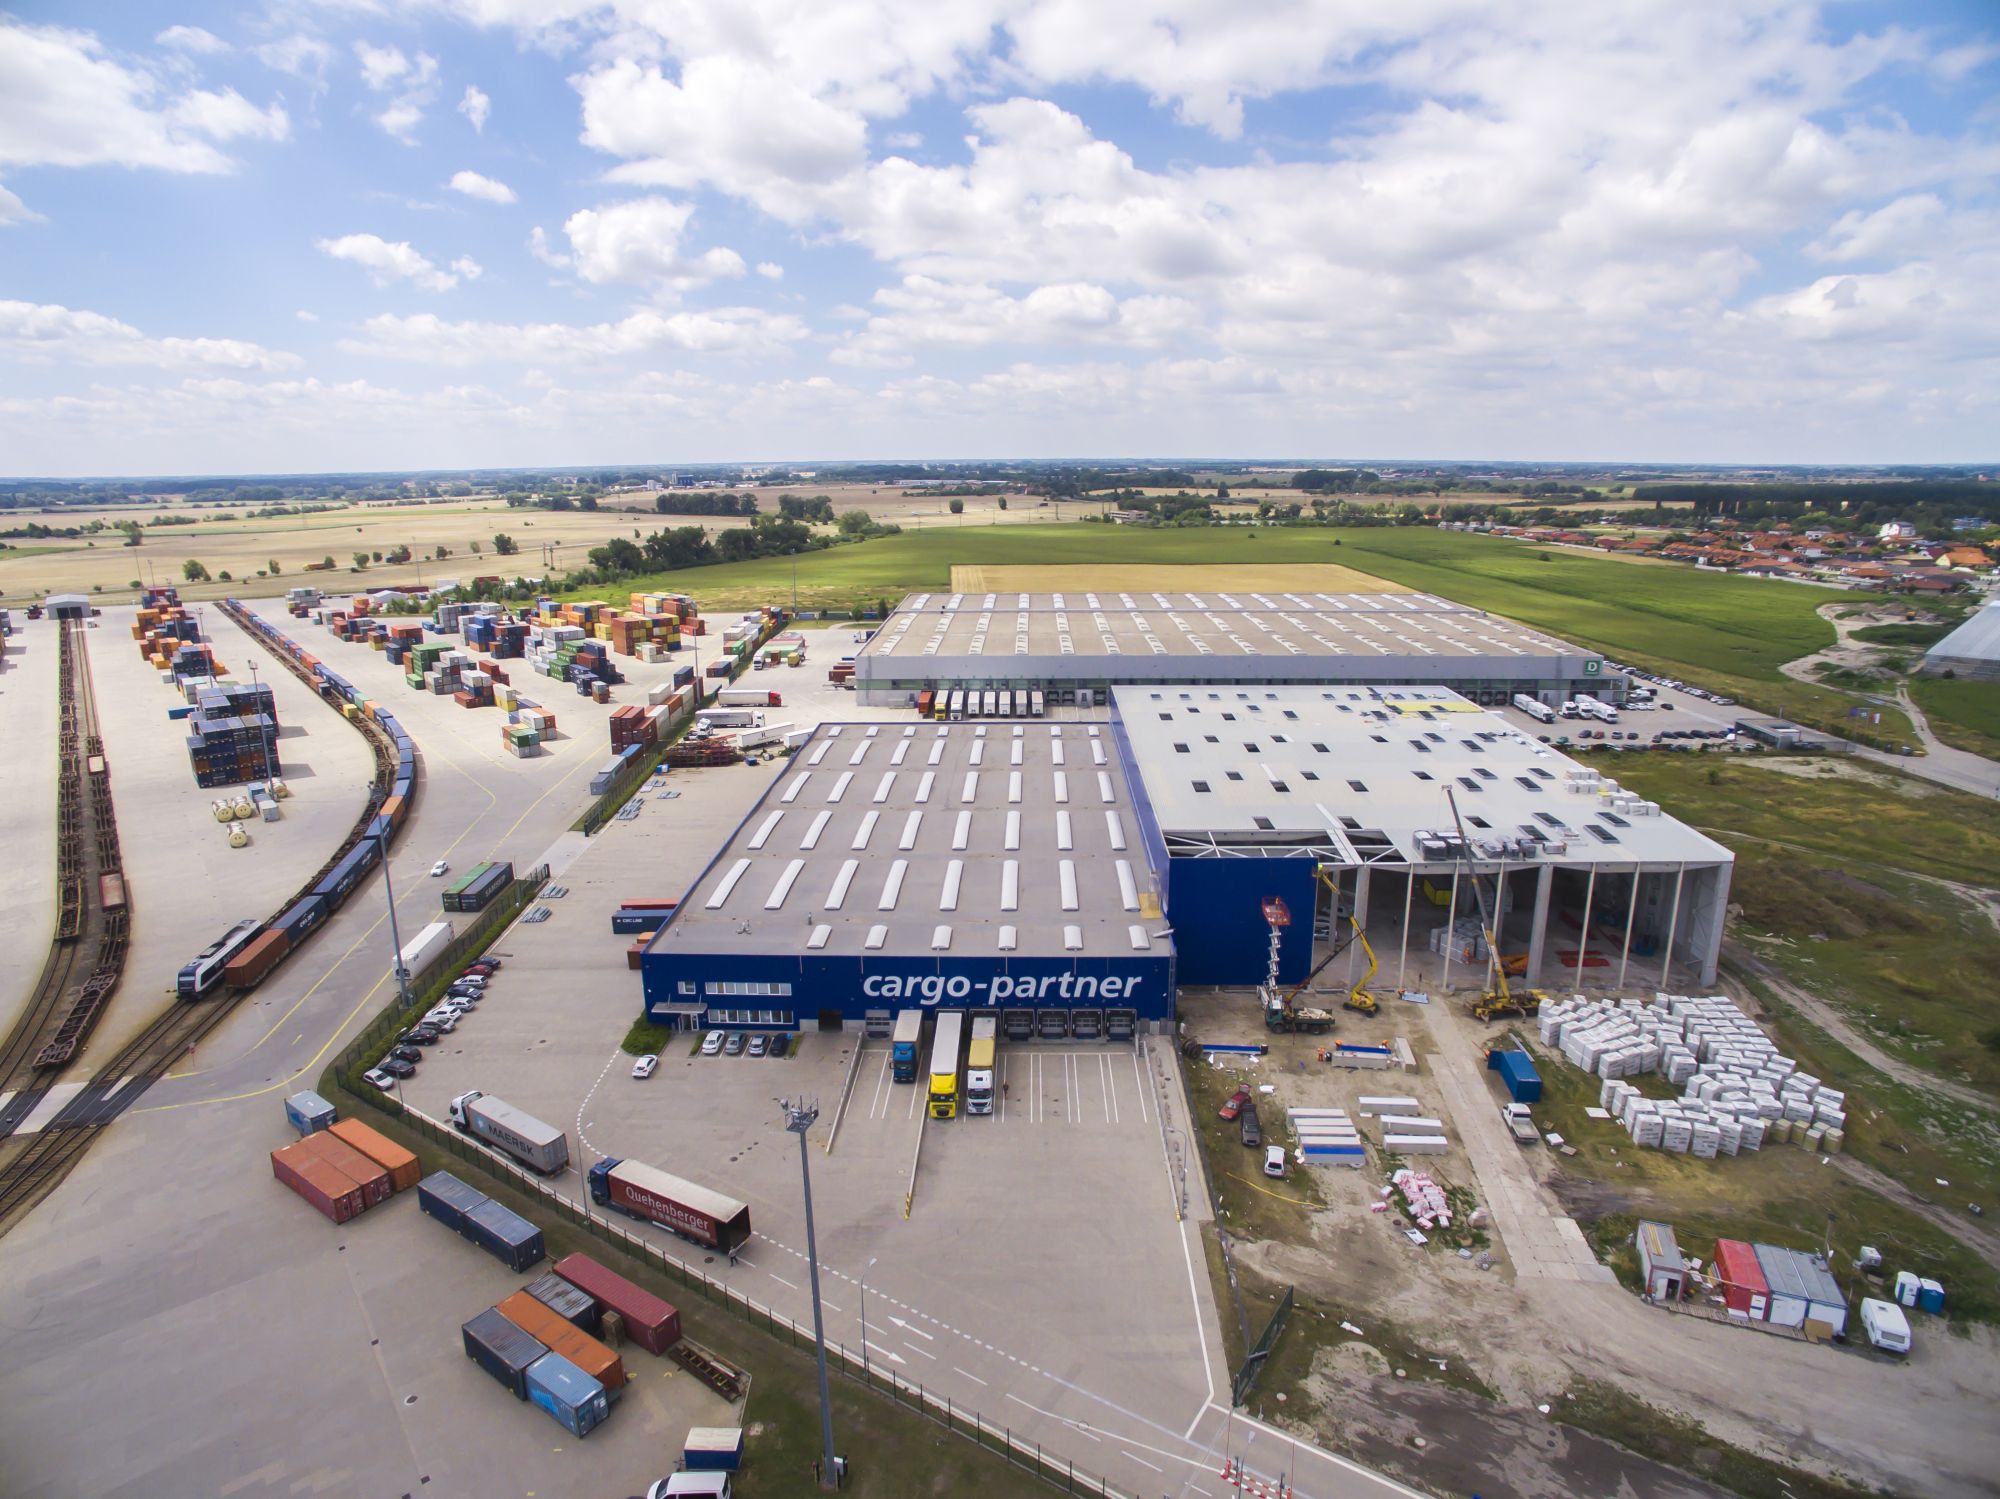 cargo-partner to Expand Capacity of Logistics Center in Slovakia